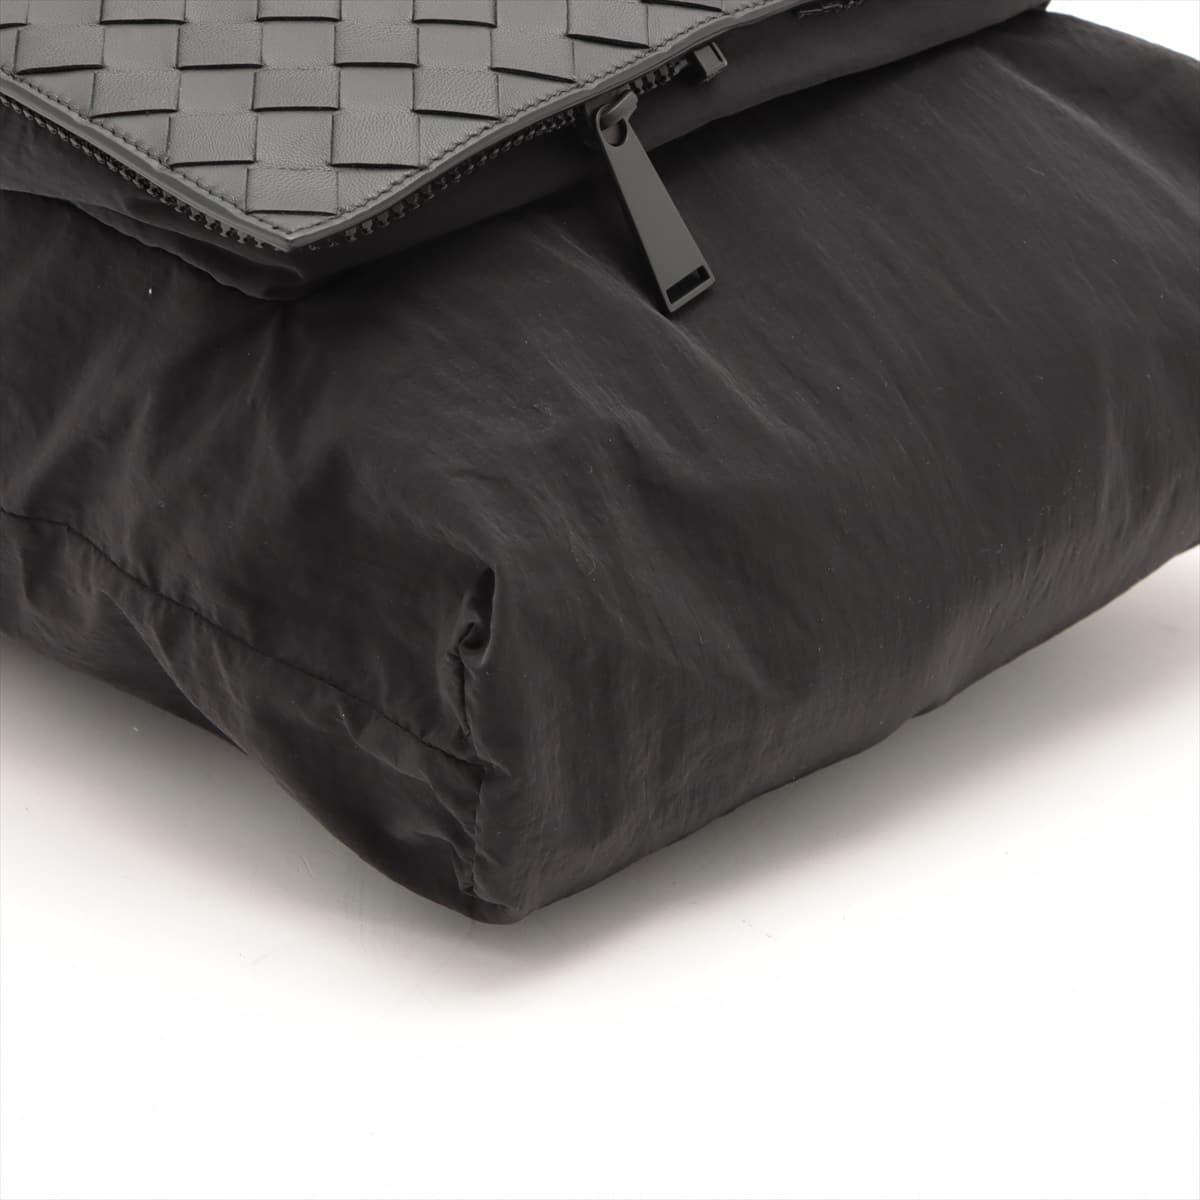 Bottega Veneta Intrecciato Nylon & leather Tote bag Black